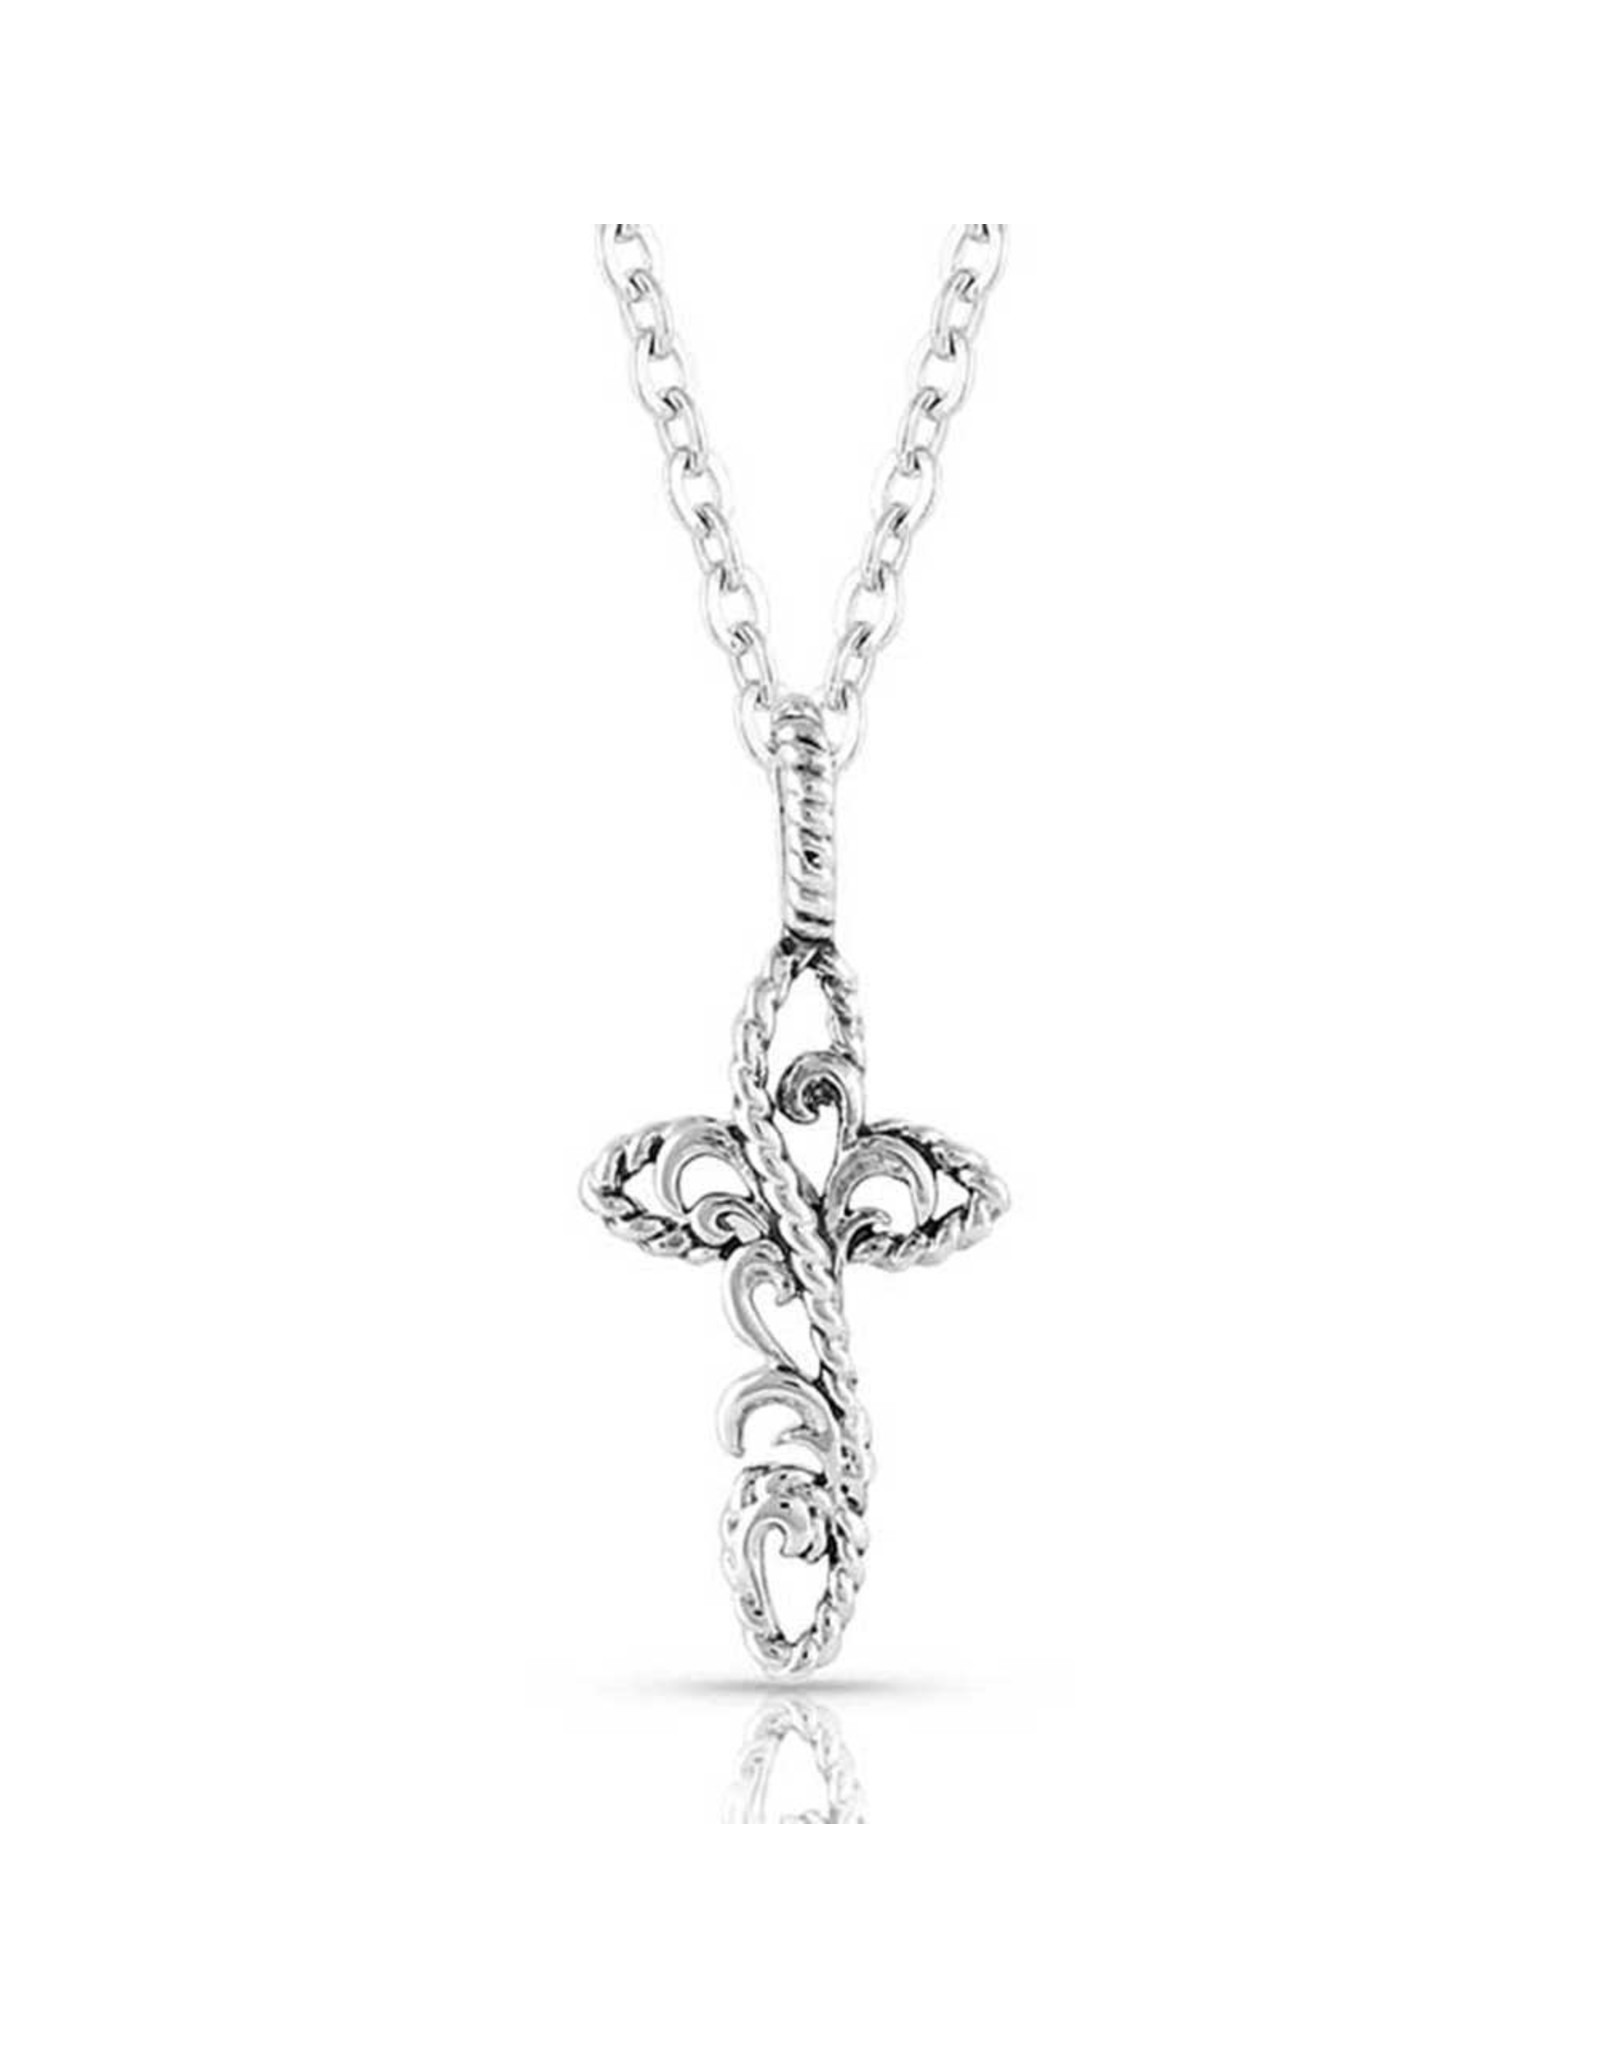 Montana Silversmith Growing Faith Cross NC5185 Necklace